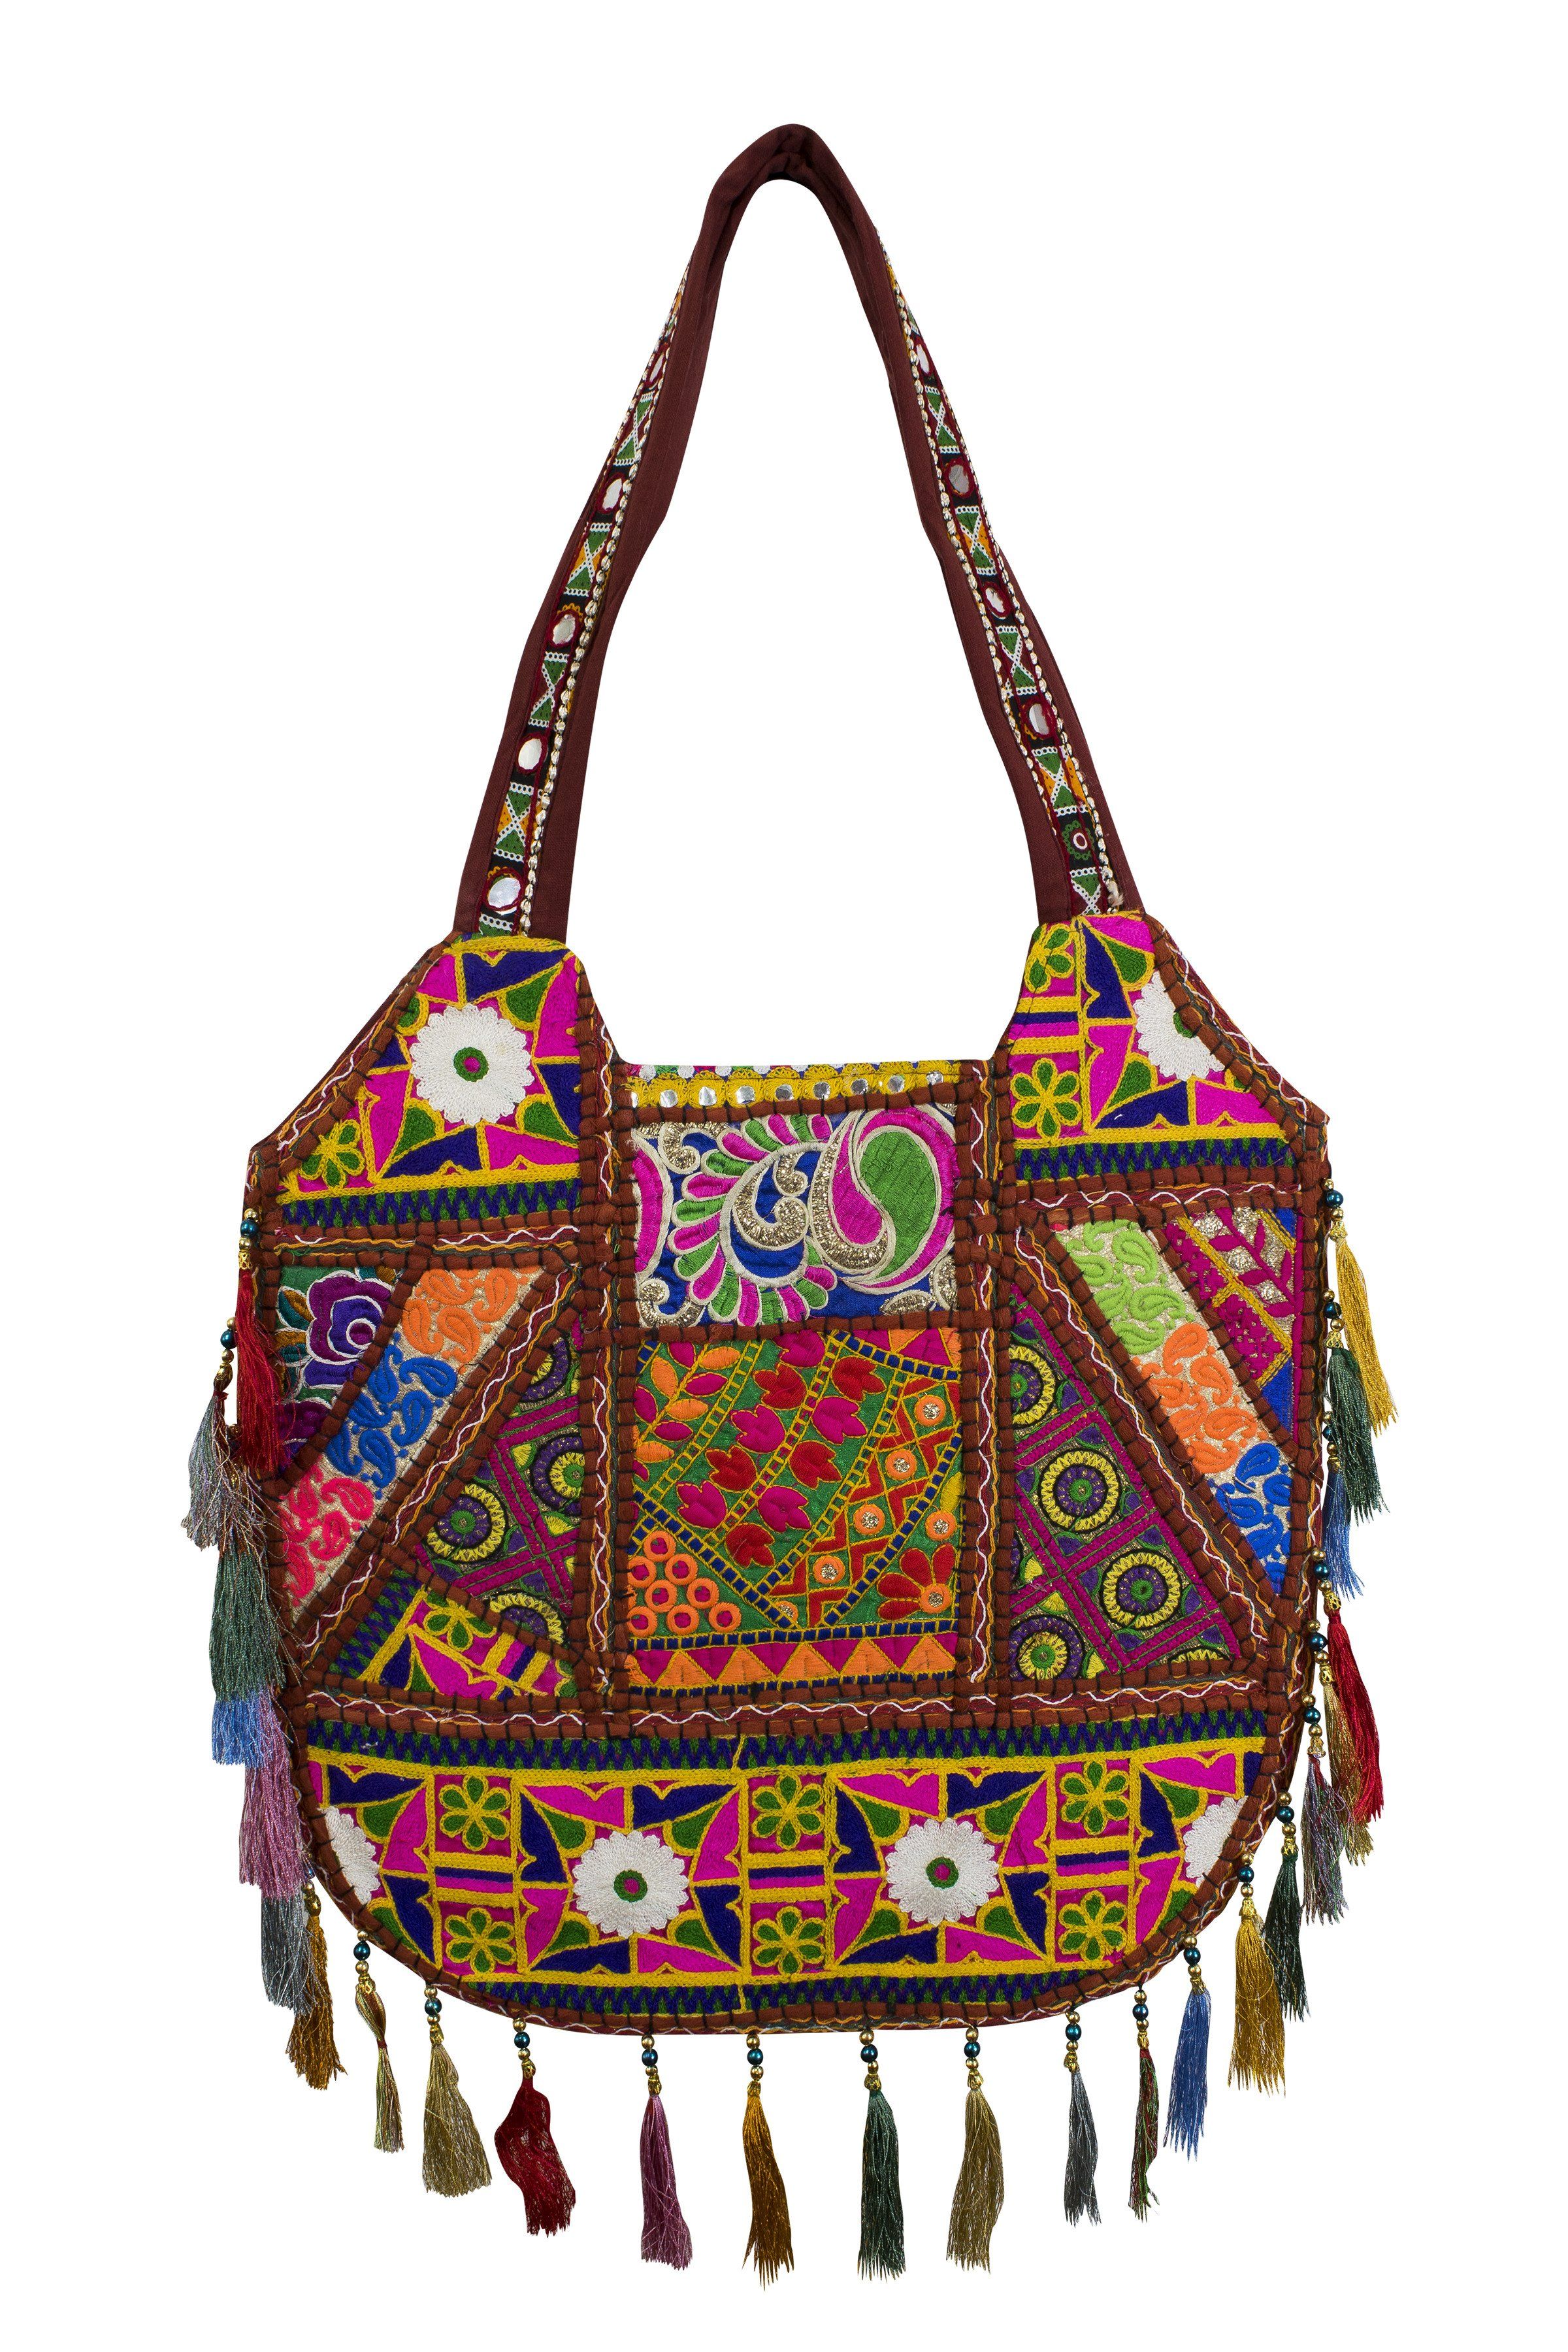 Buy Hand Embroidered kutchi hand bag - Rabari Embroidery